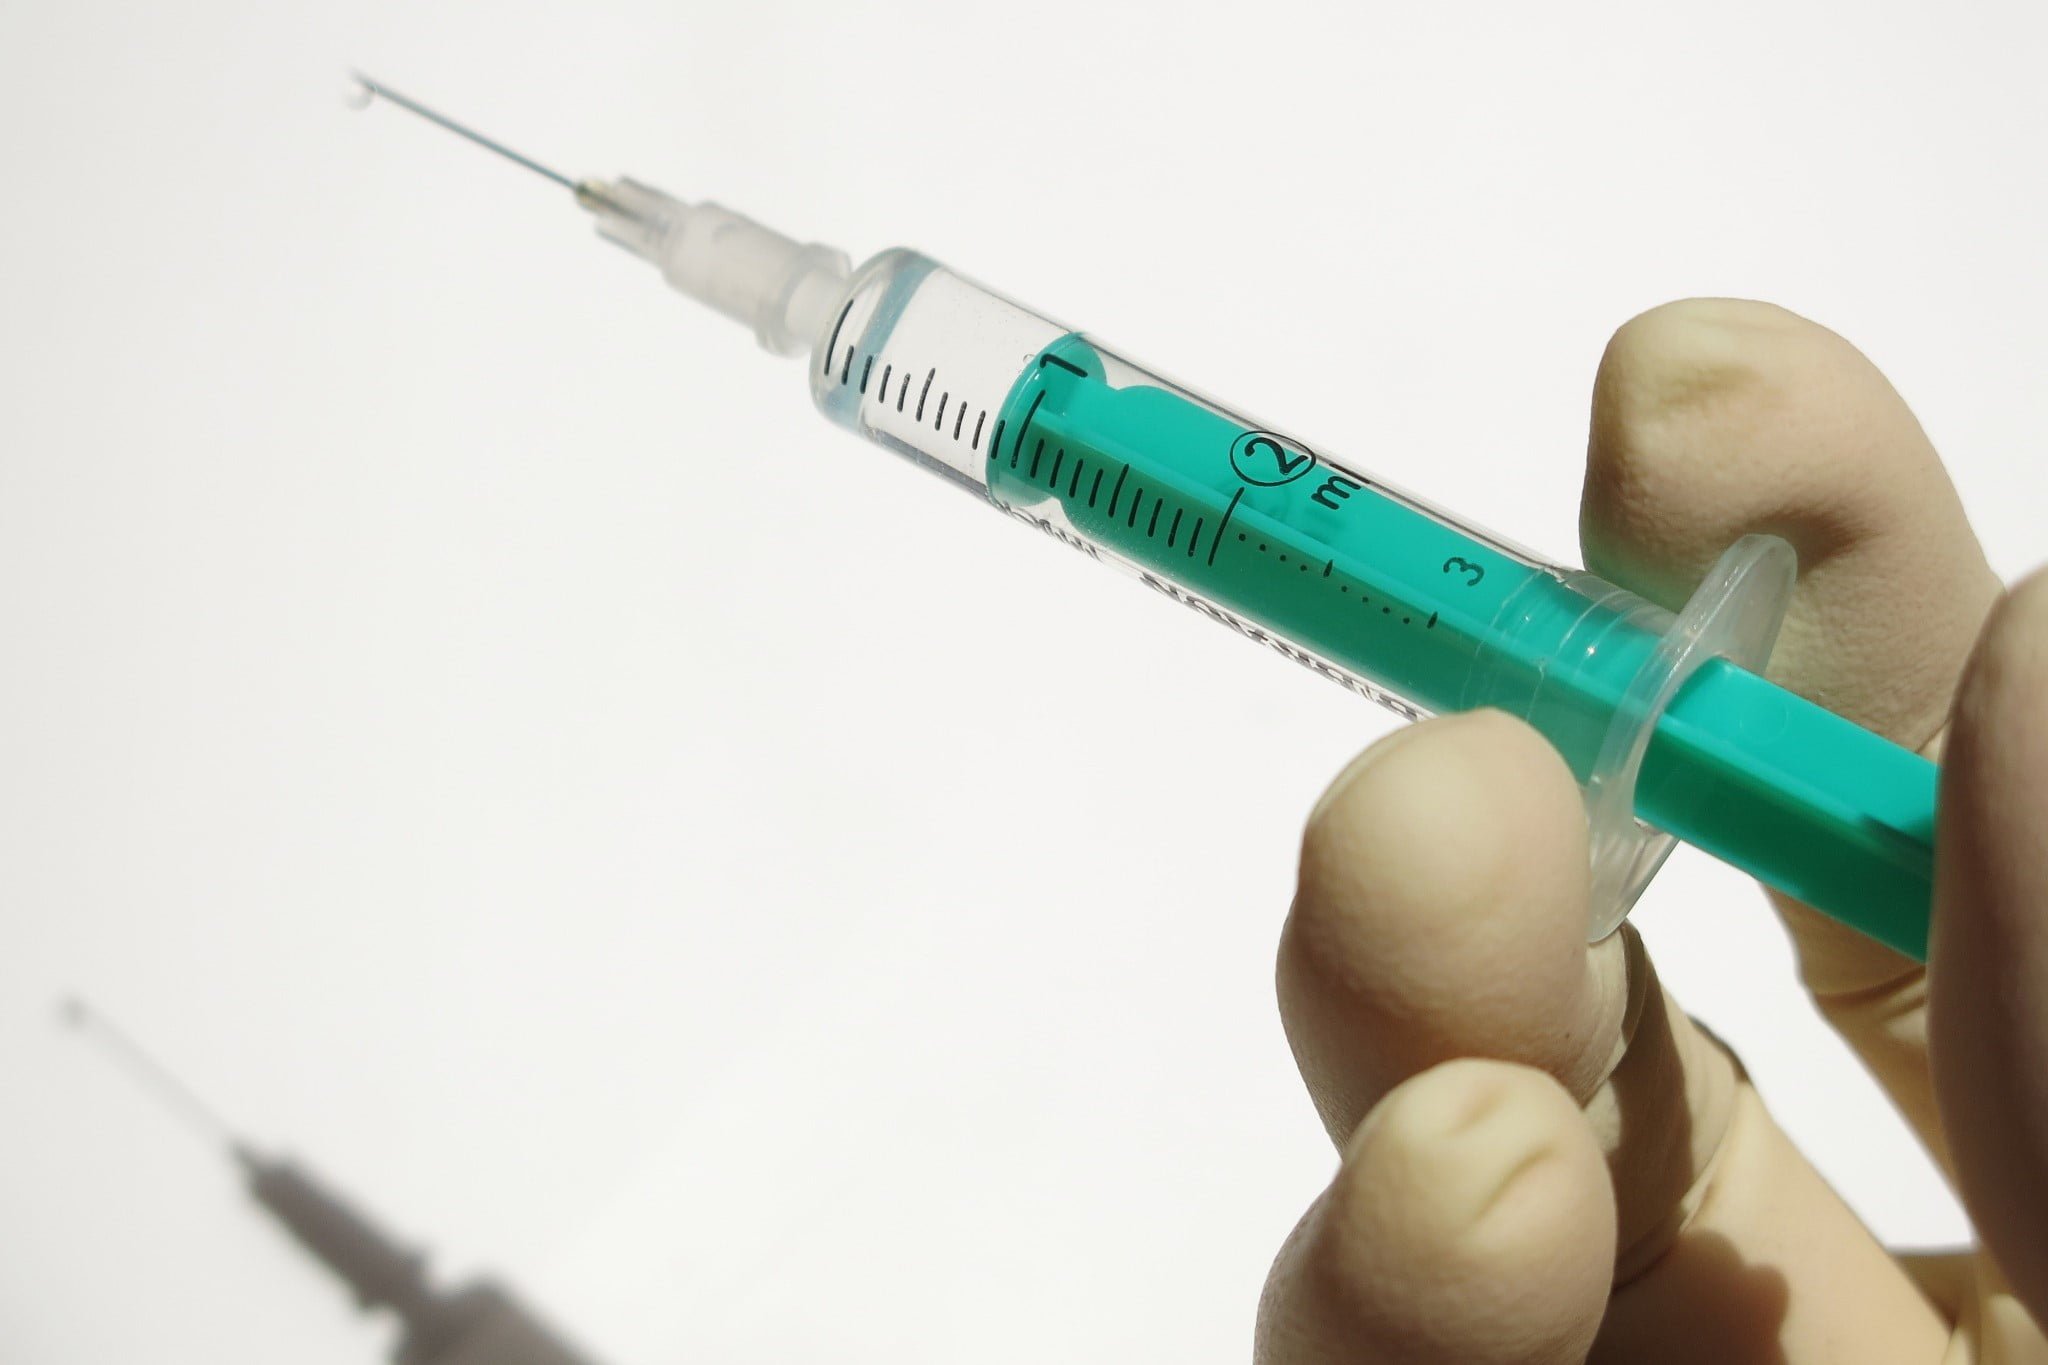 should covid vaccines be mandatory?